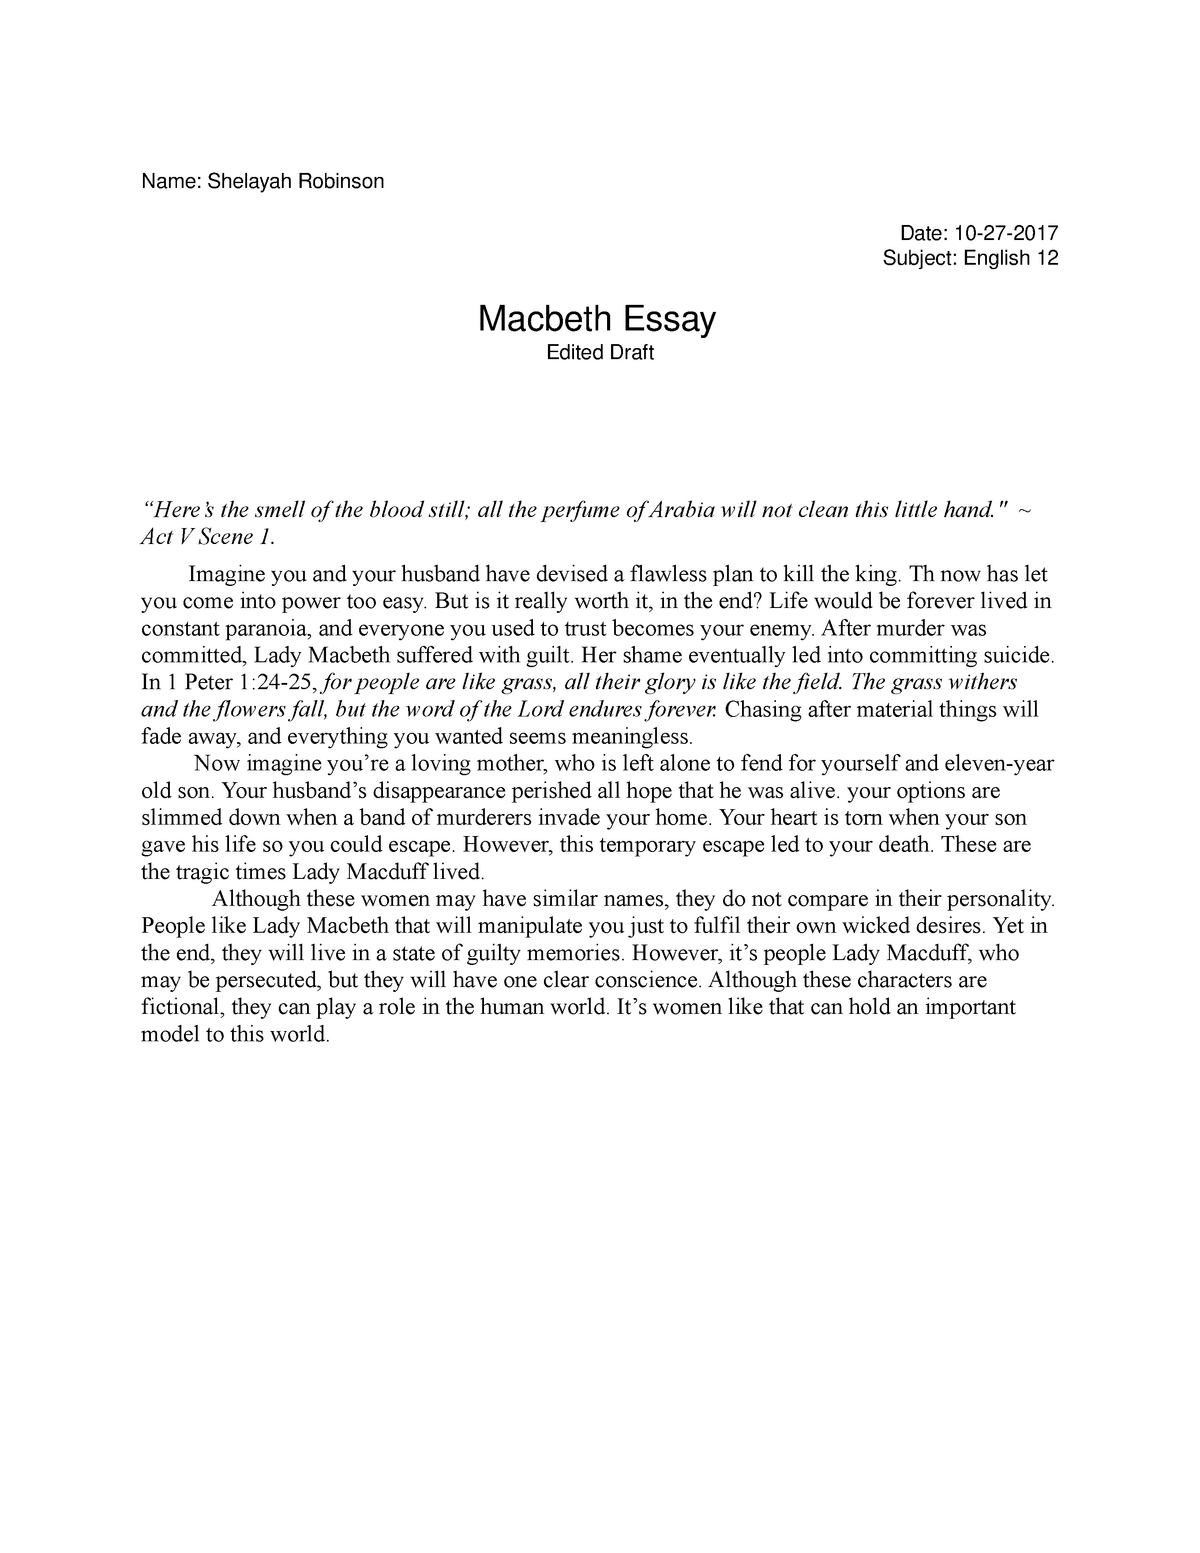 literary analysis essay for macbeth